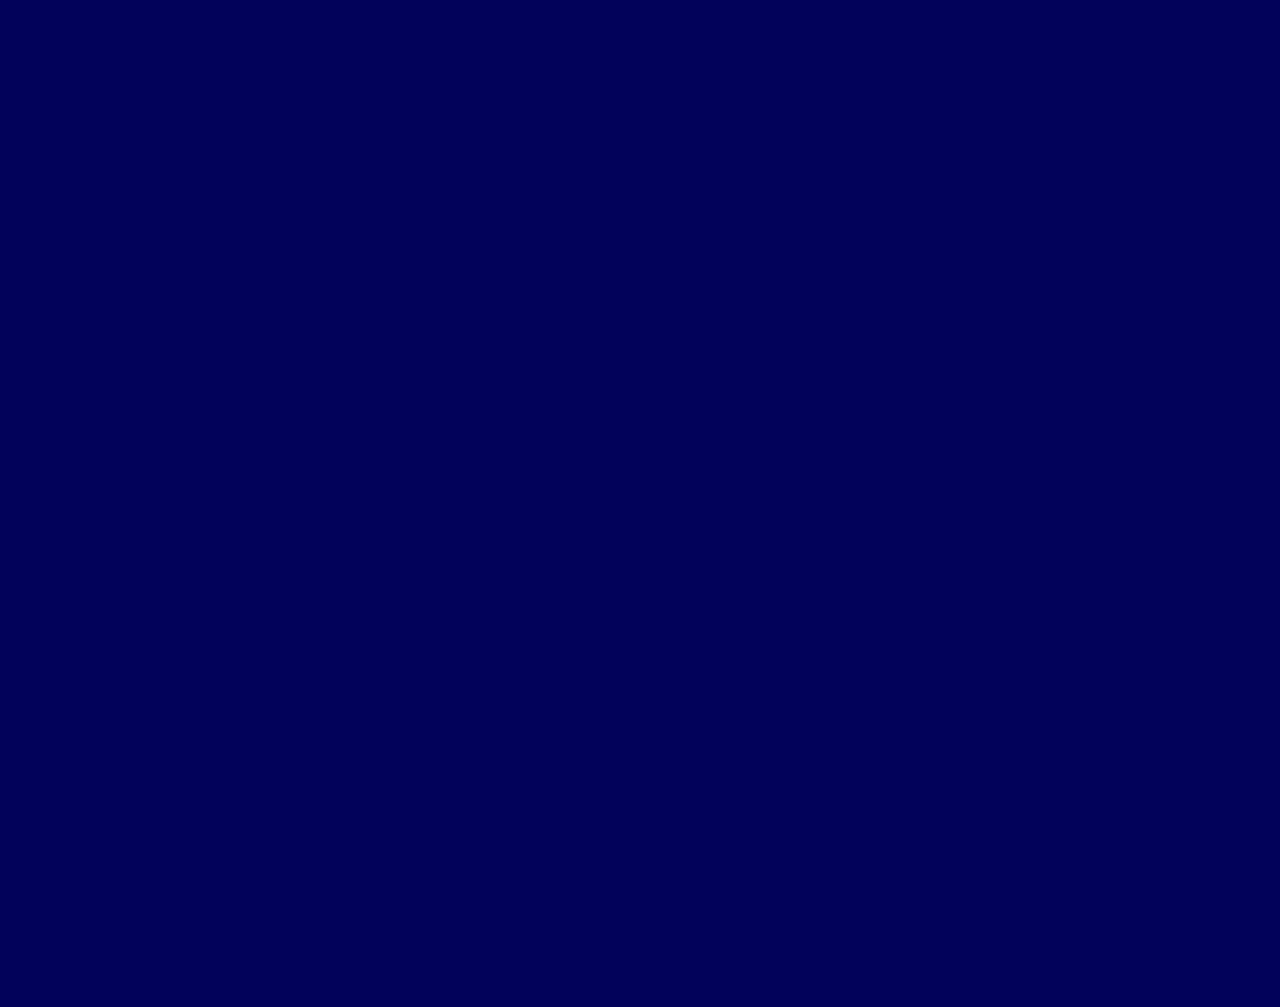 Hd Wallpapers Navy Blue Texture 1024 X 683 263 Kb Jpeg HD Wallpapers